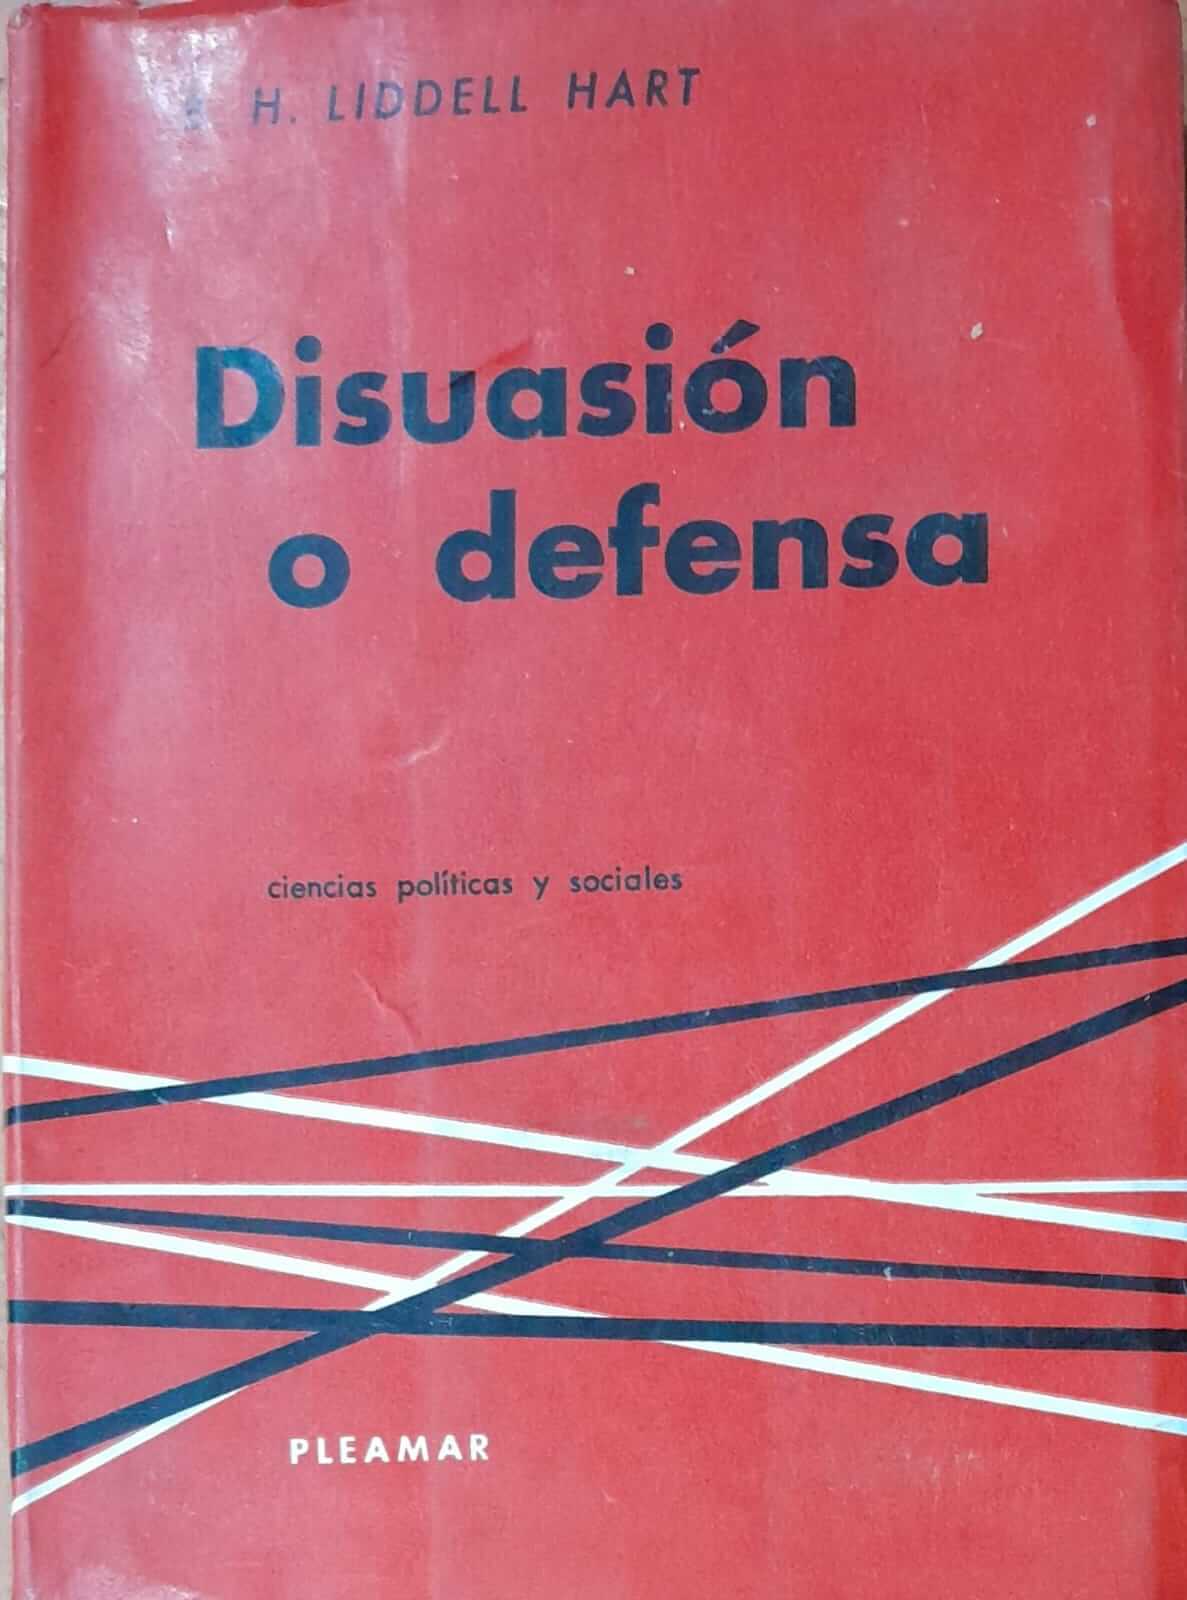 Disuasion o defensa